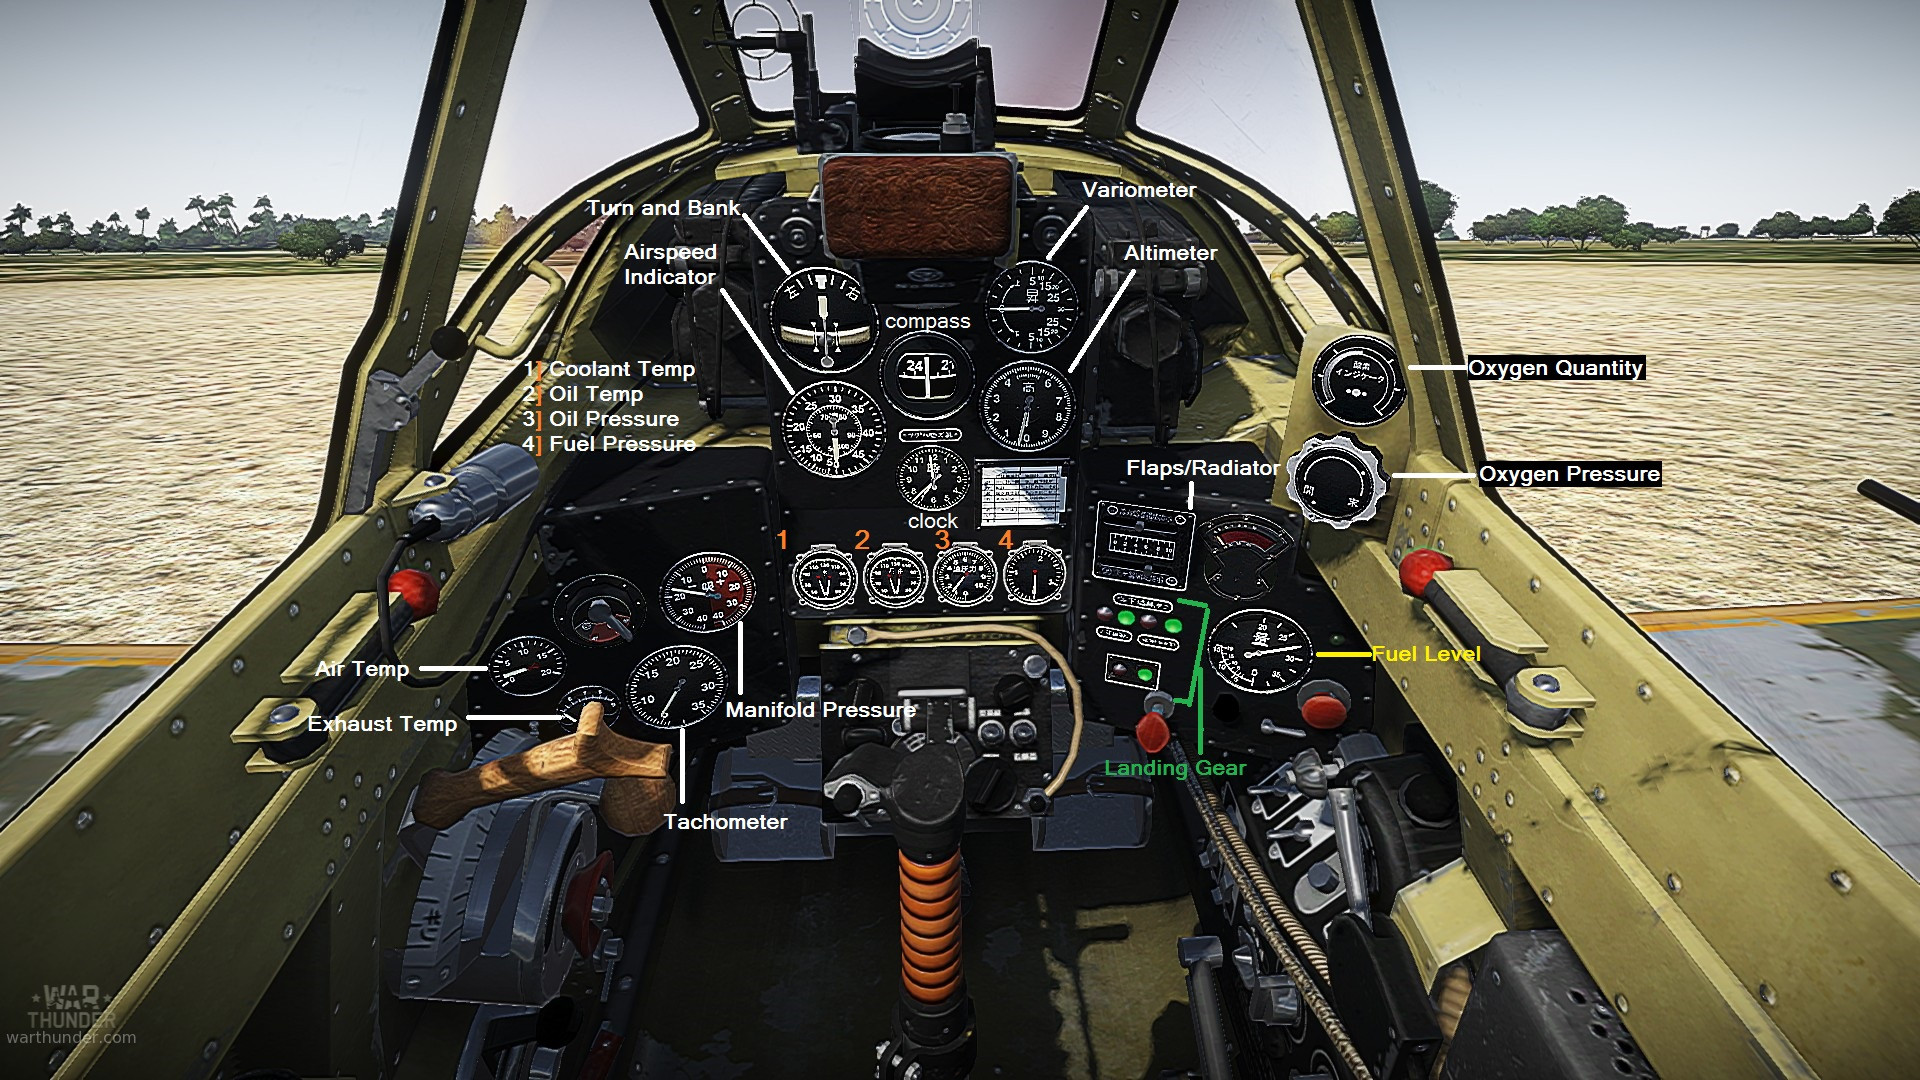 CockpitImage_Ki-61.jpg